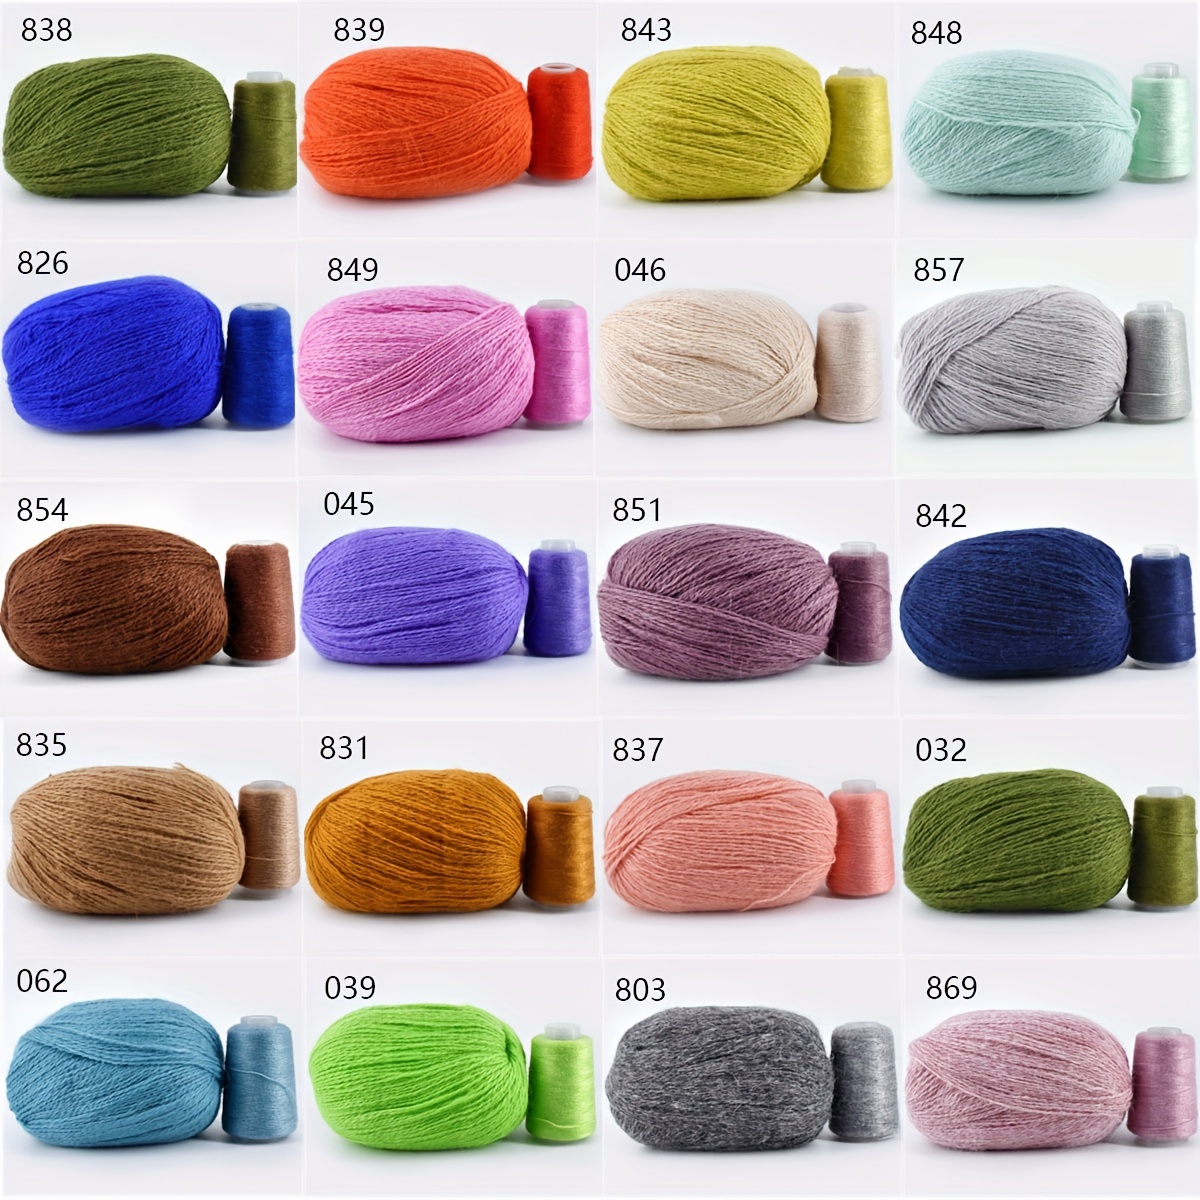 50+20g Cashmere Wool Sweater Hand-knitted Yarn Wol Knitting Scarf Yarn for  Knitting Crochet